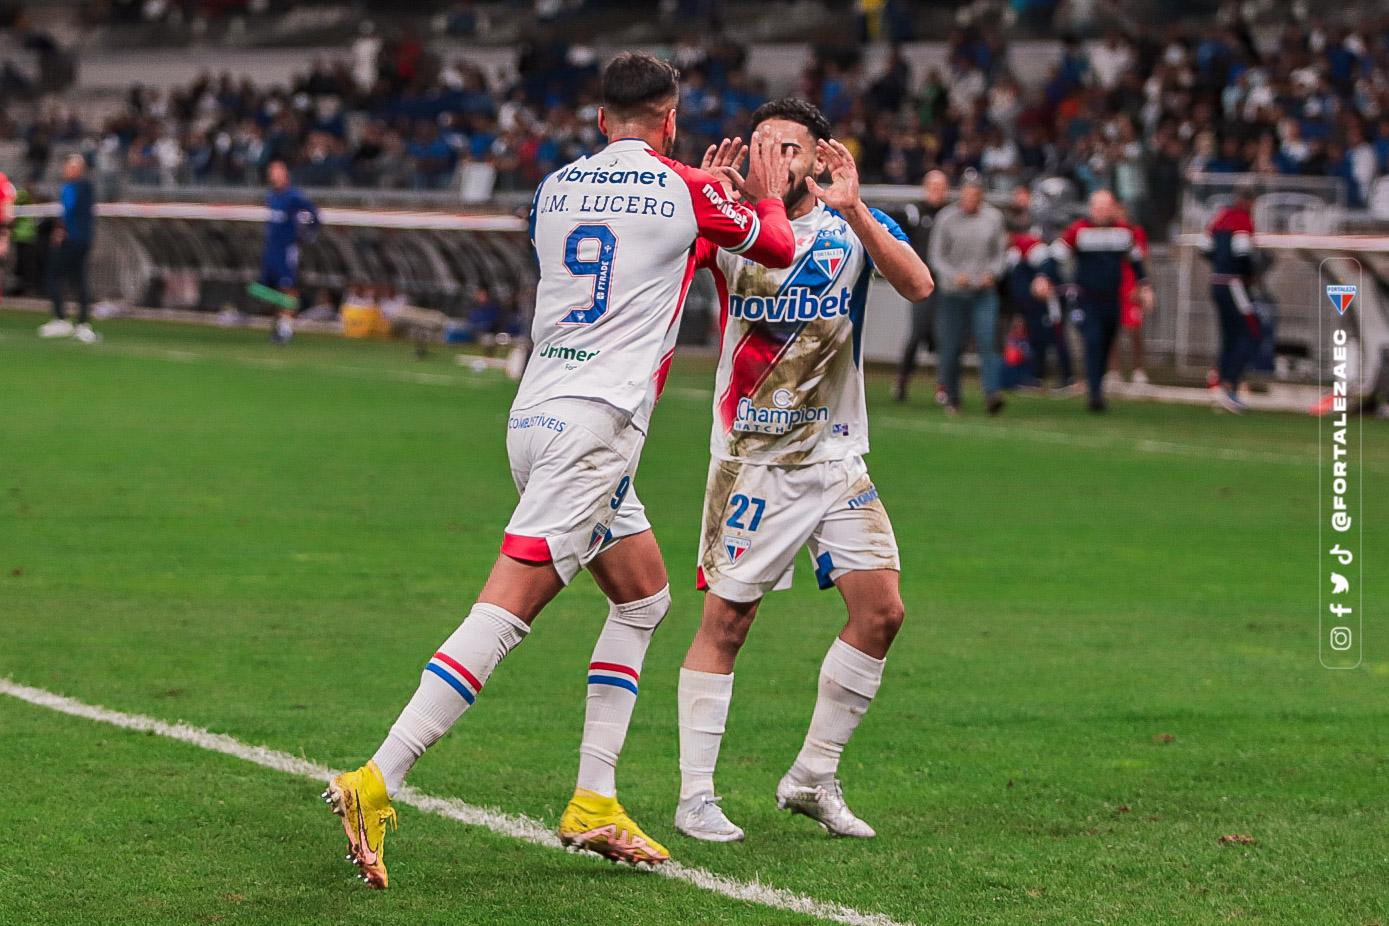 Lucero e Calebe comemoram gol marcado pelo Fortaleza contra o Cruzeiro